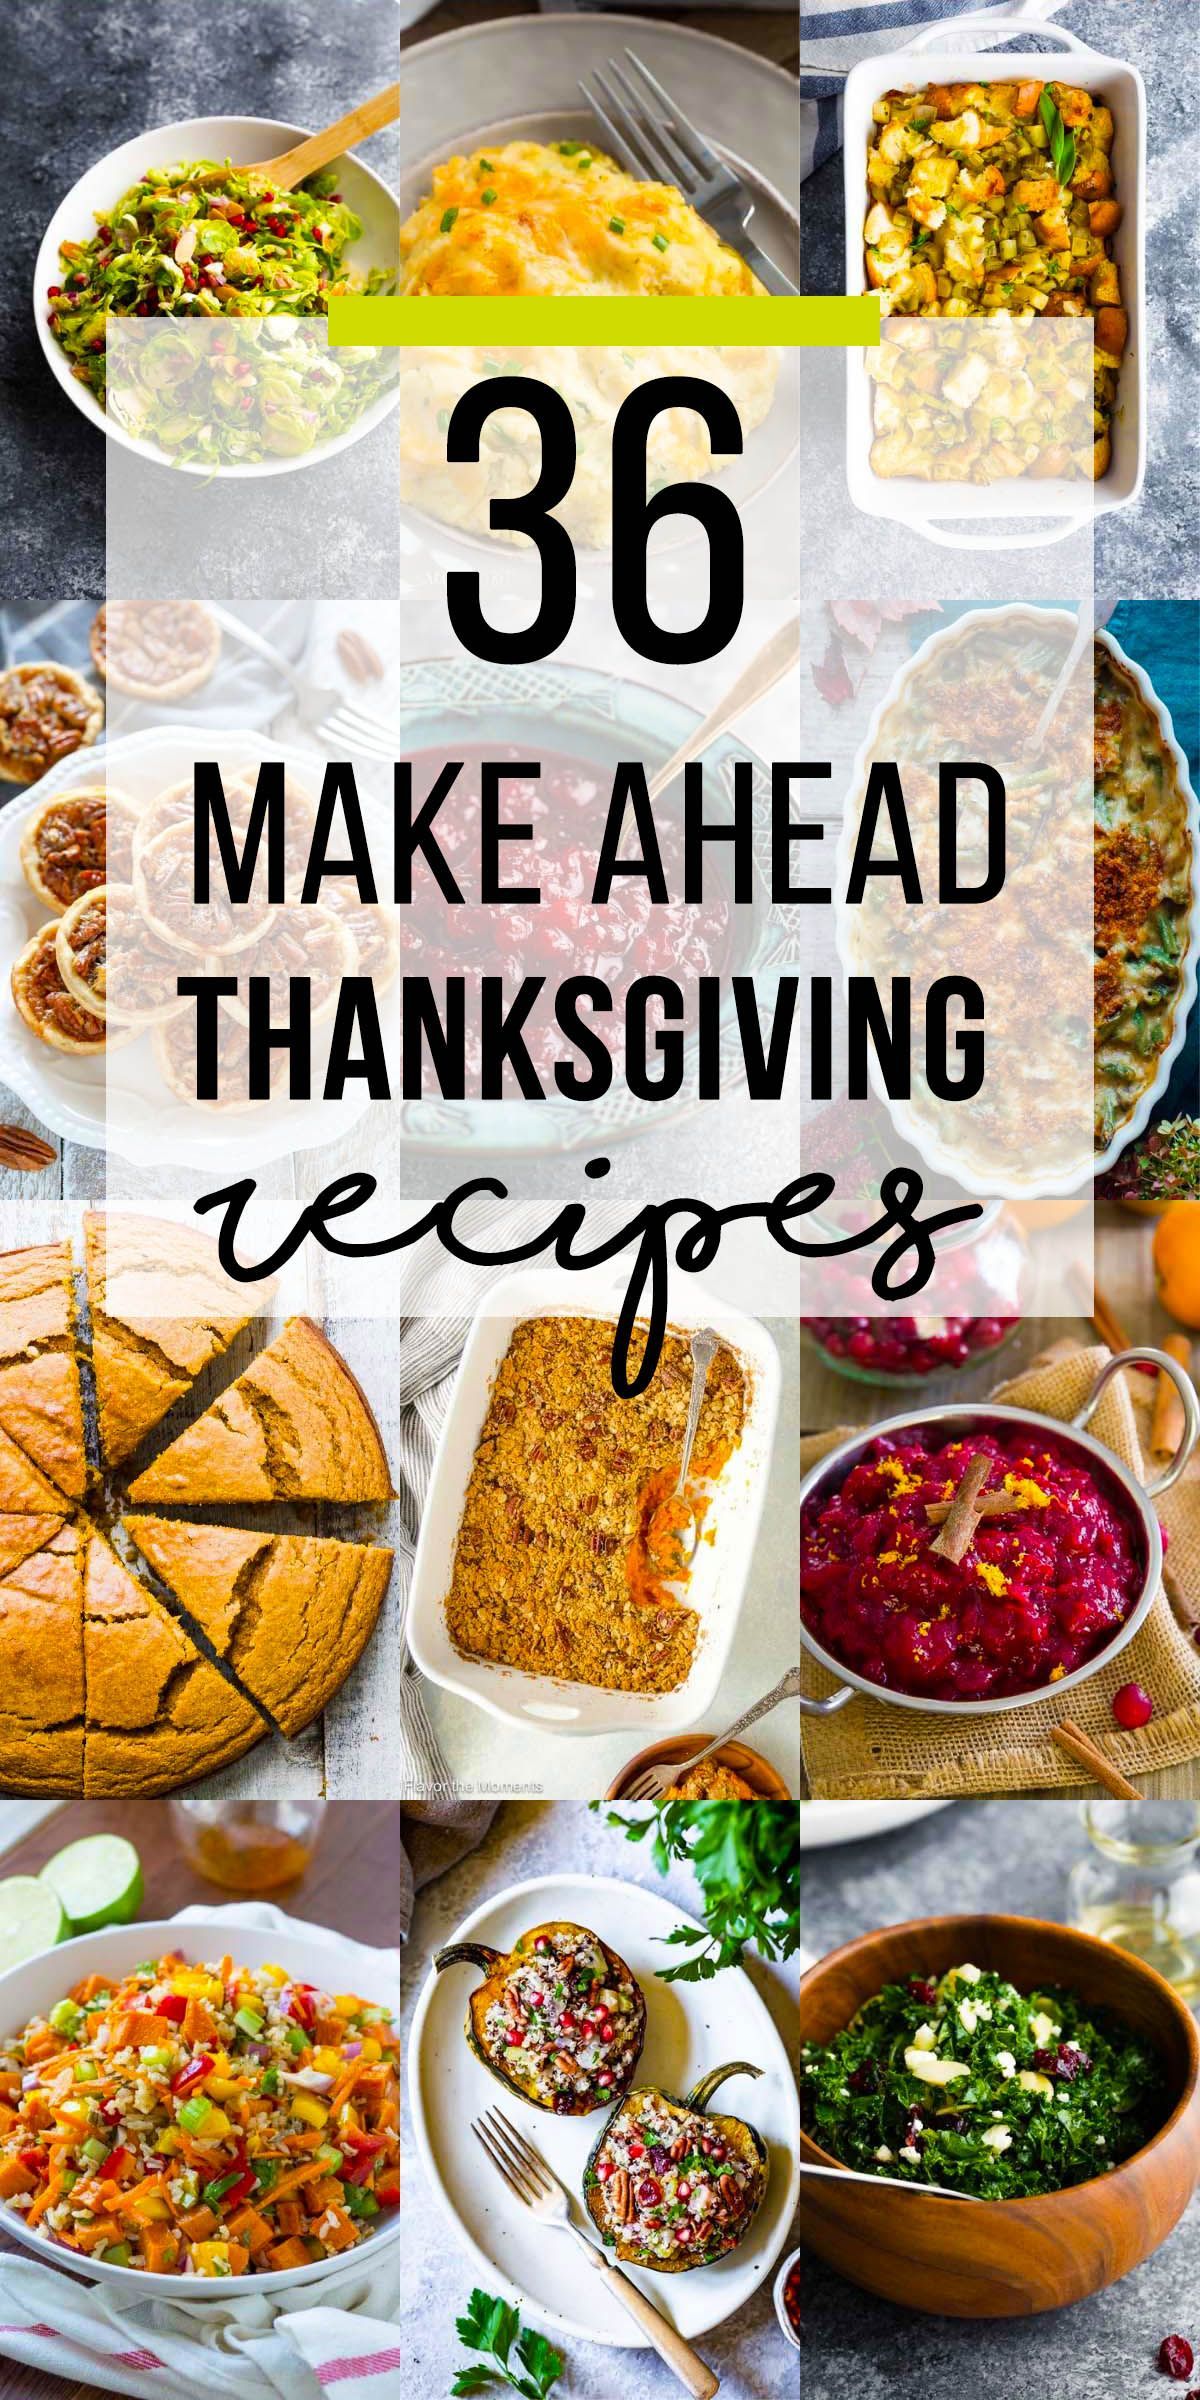 Make Ahead Thanksgiving Recipes -